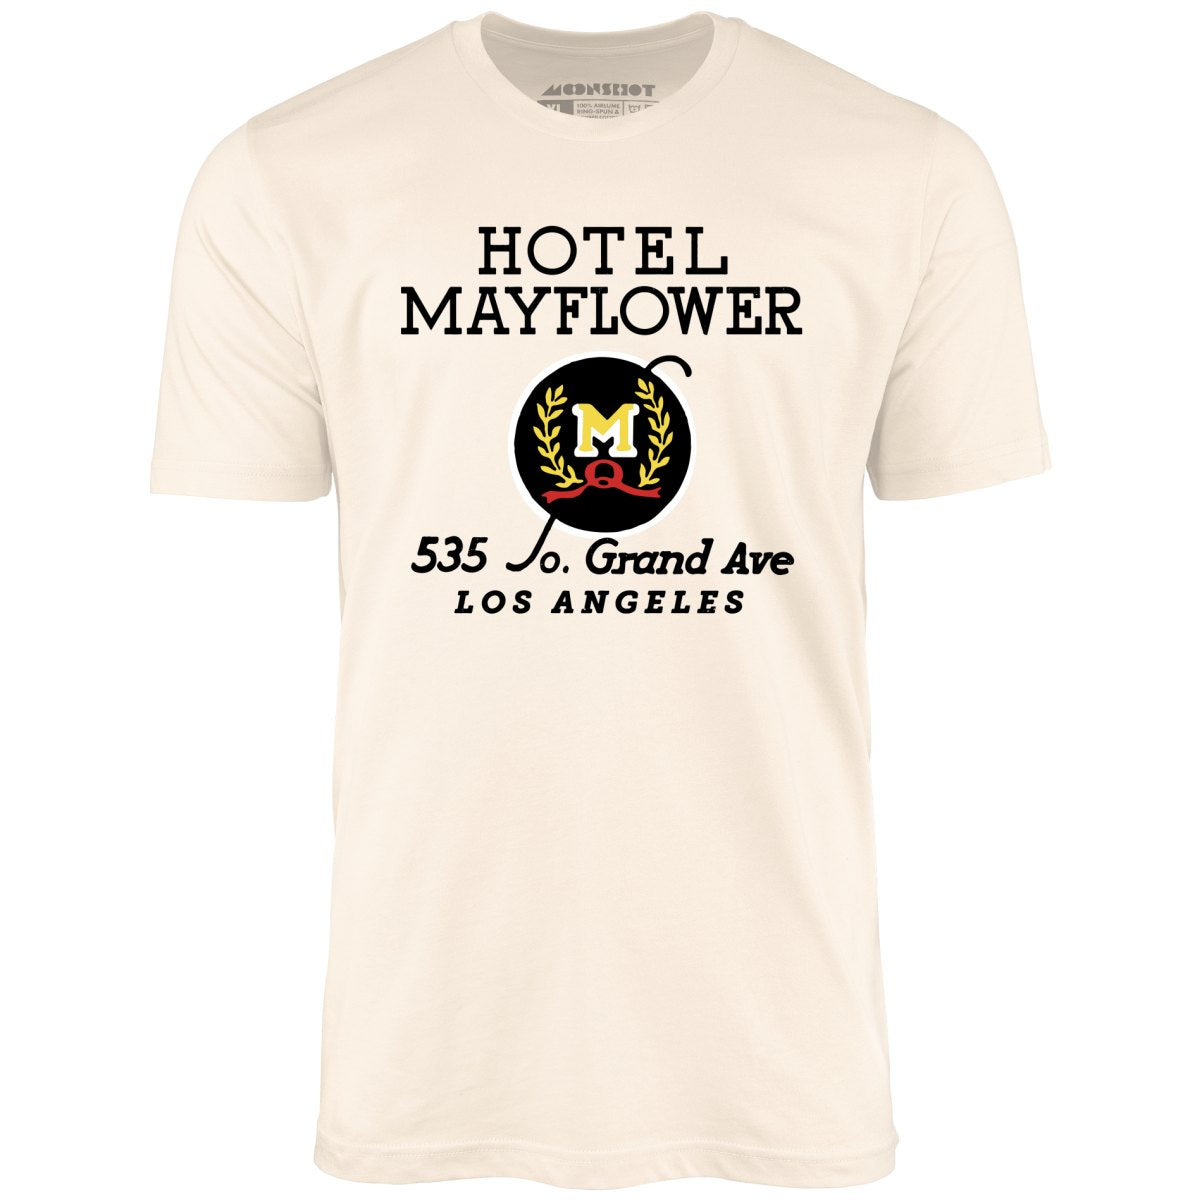 Hotel Mayflower - Los Angeles, CA - Vintage Hotel - Unisex T-Shirt